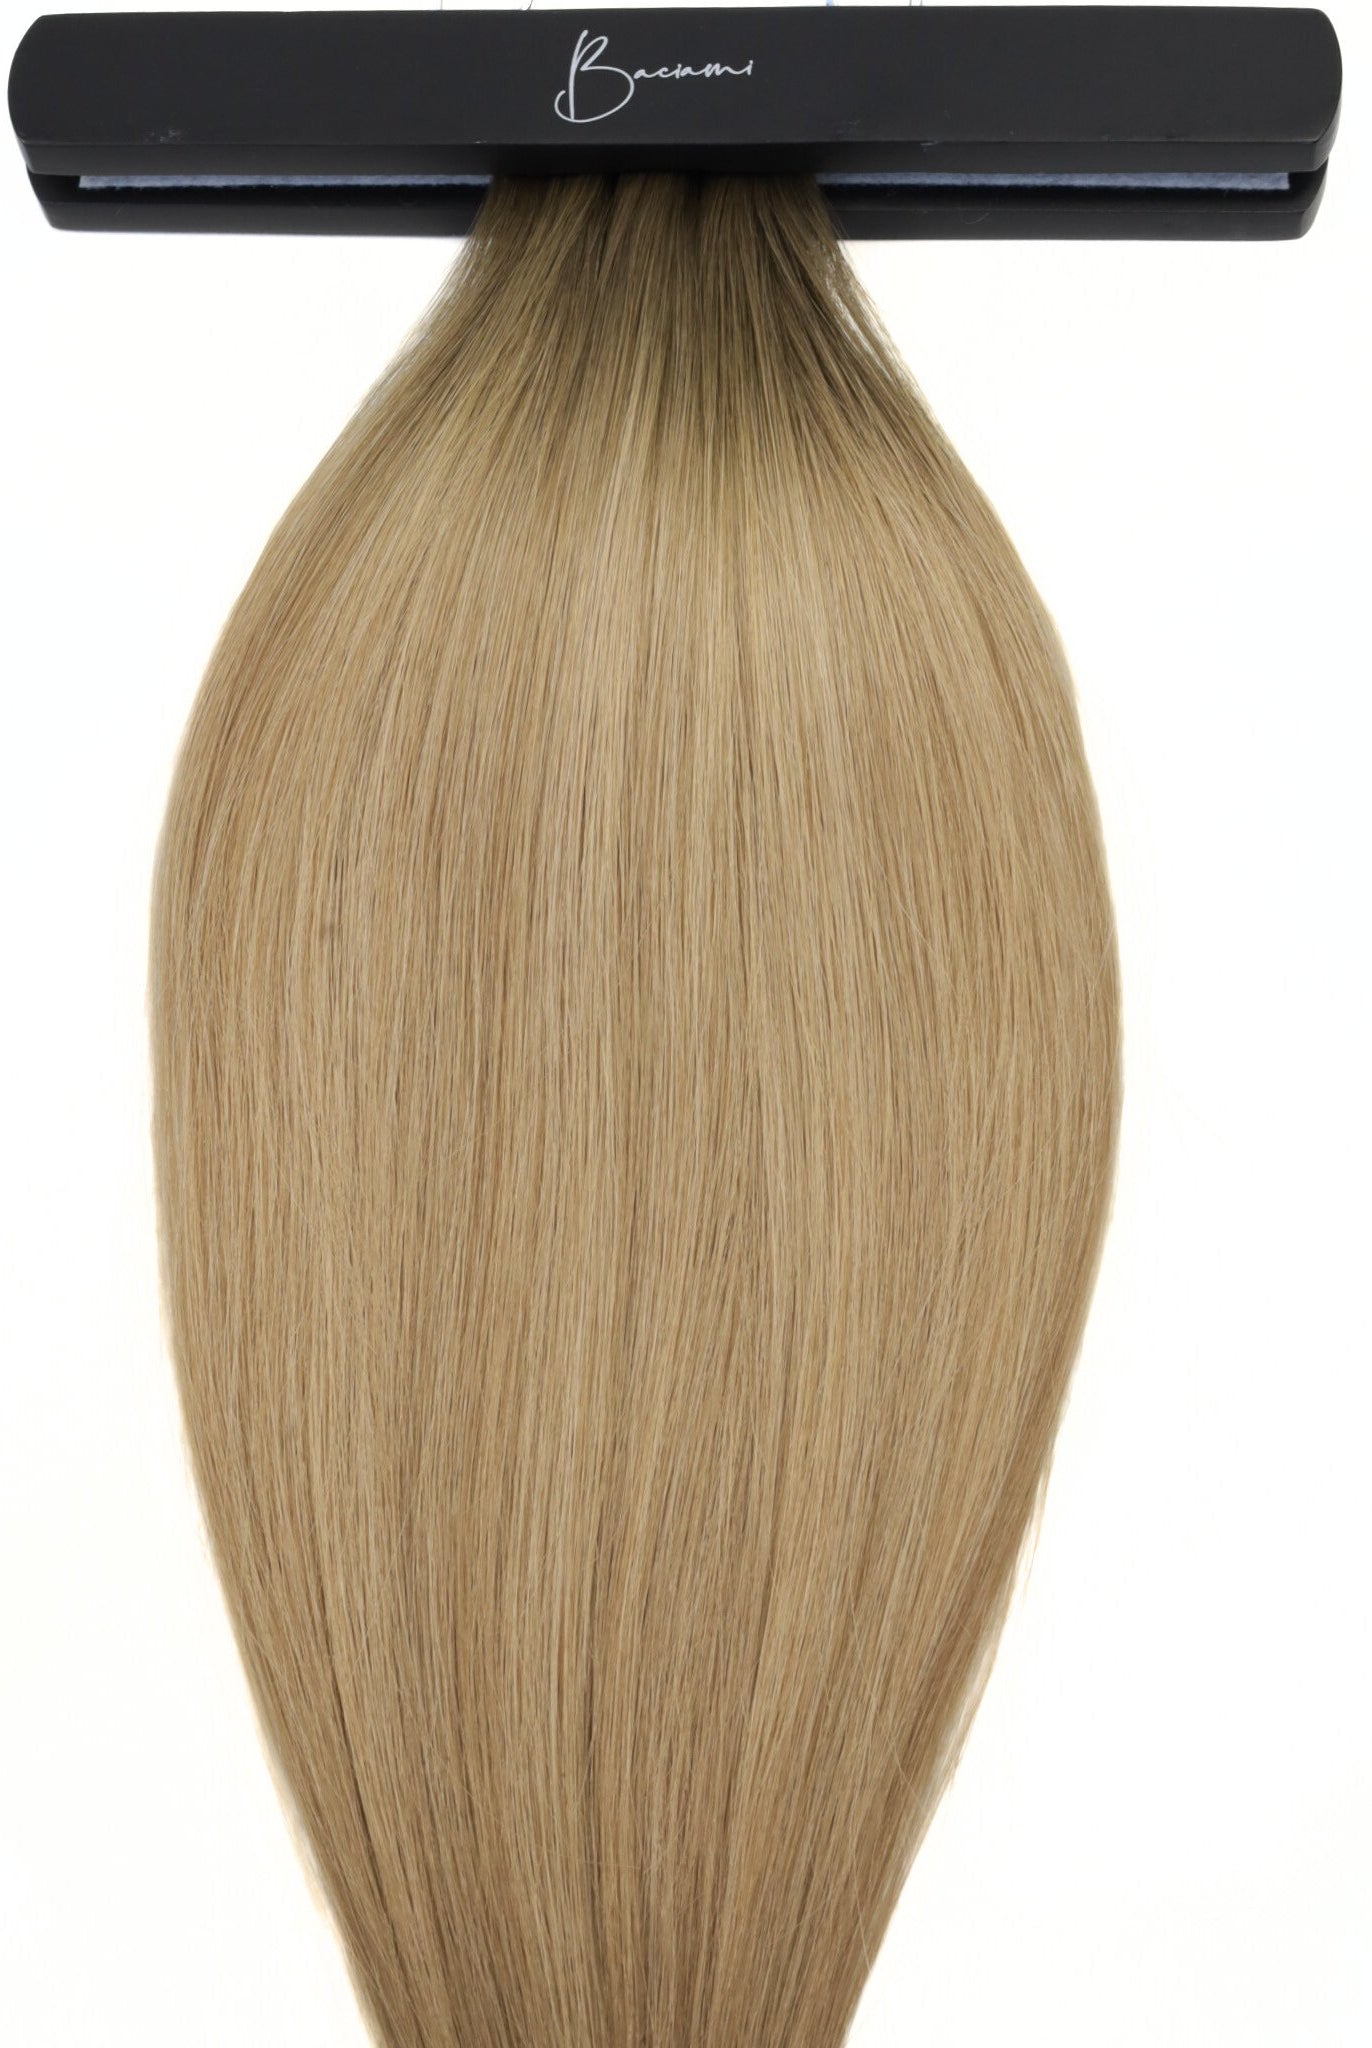 Sephora (root smudge) - Genius weft - Baciami® Hair Extensions